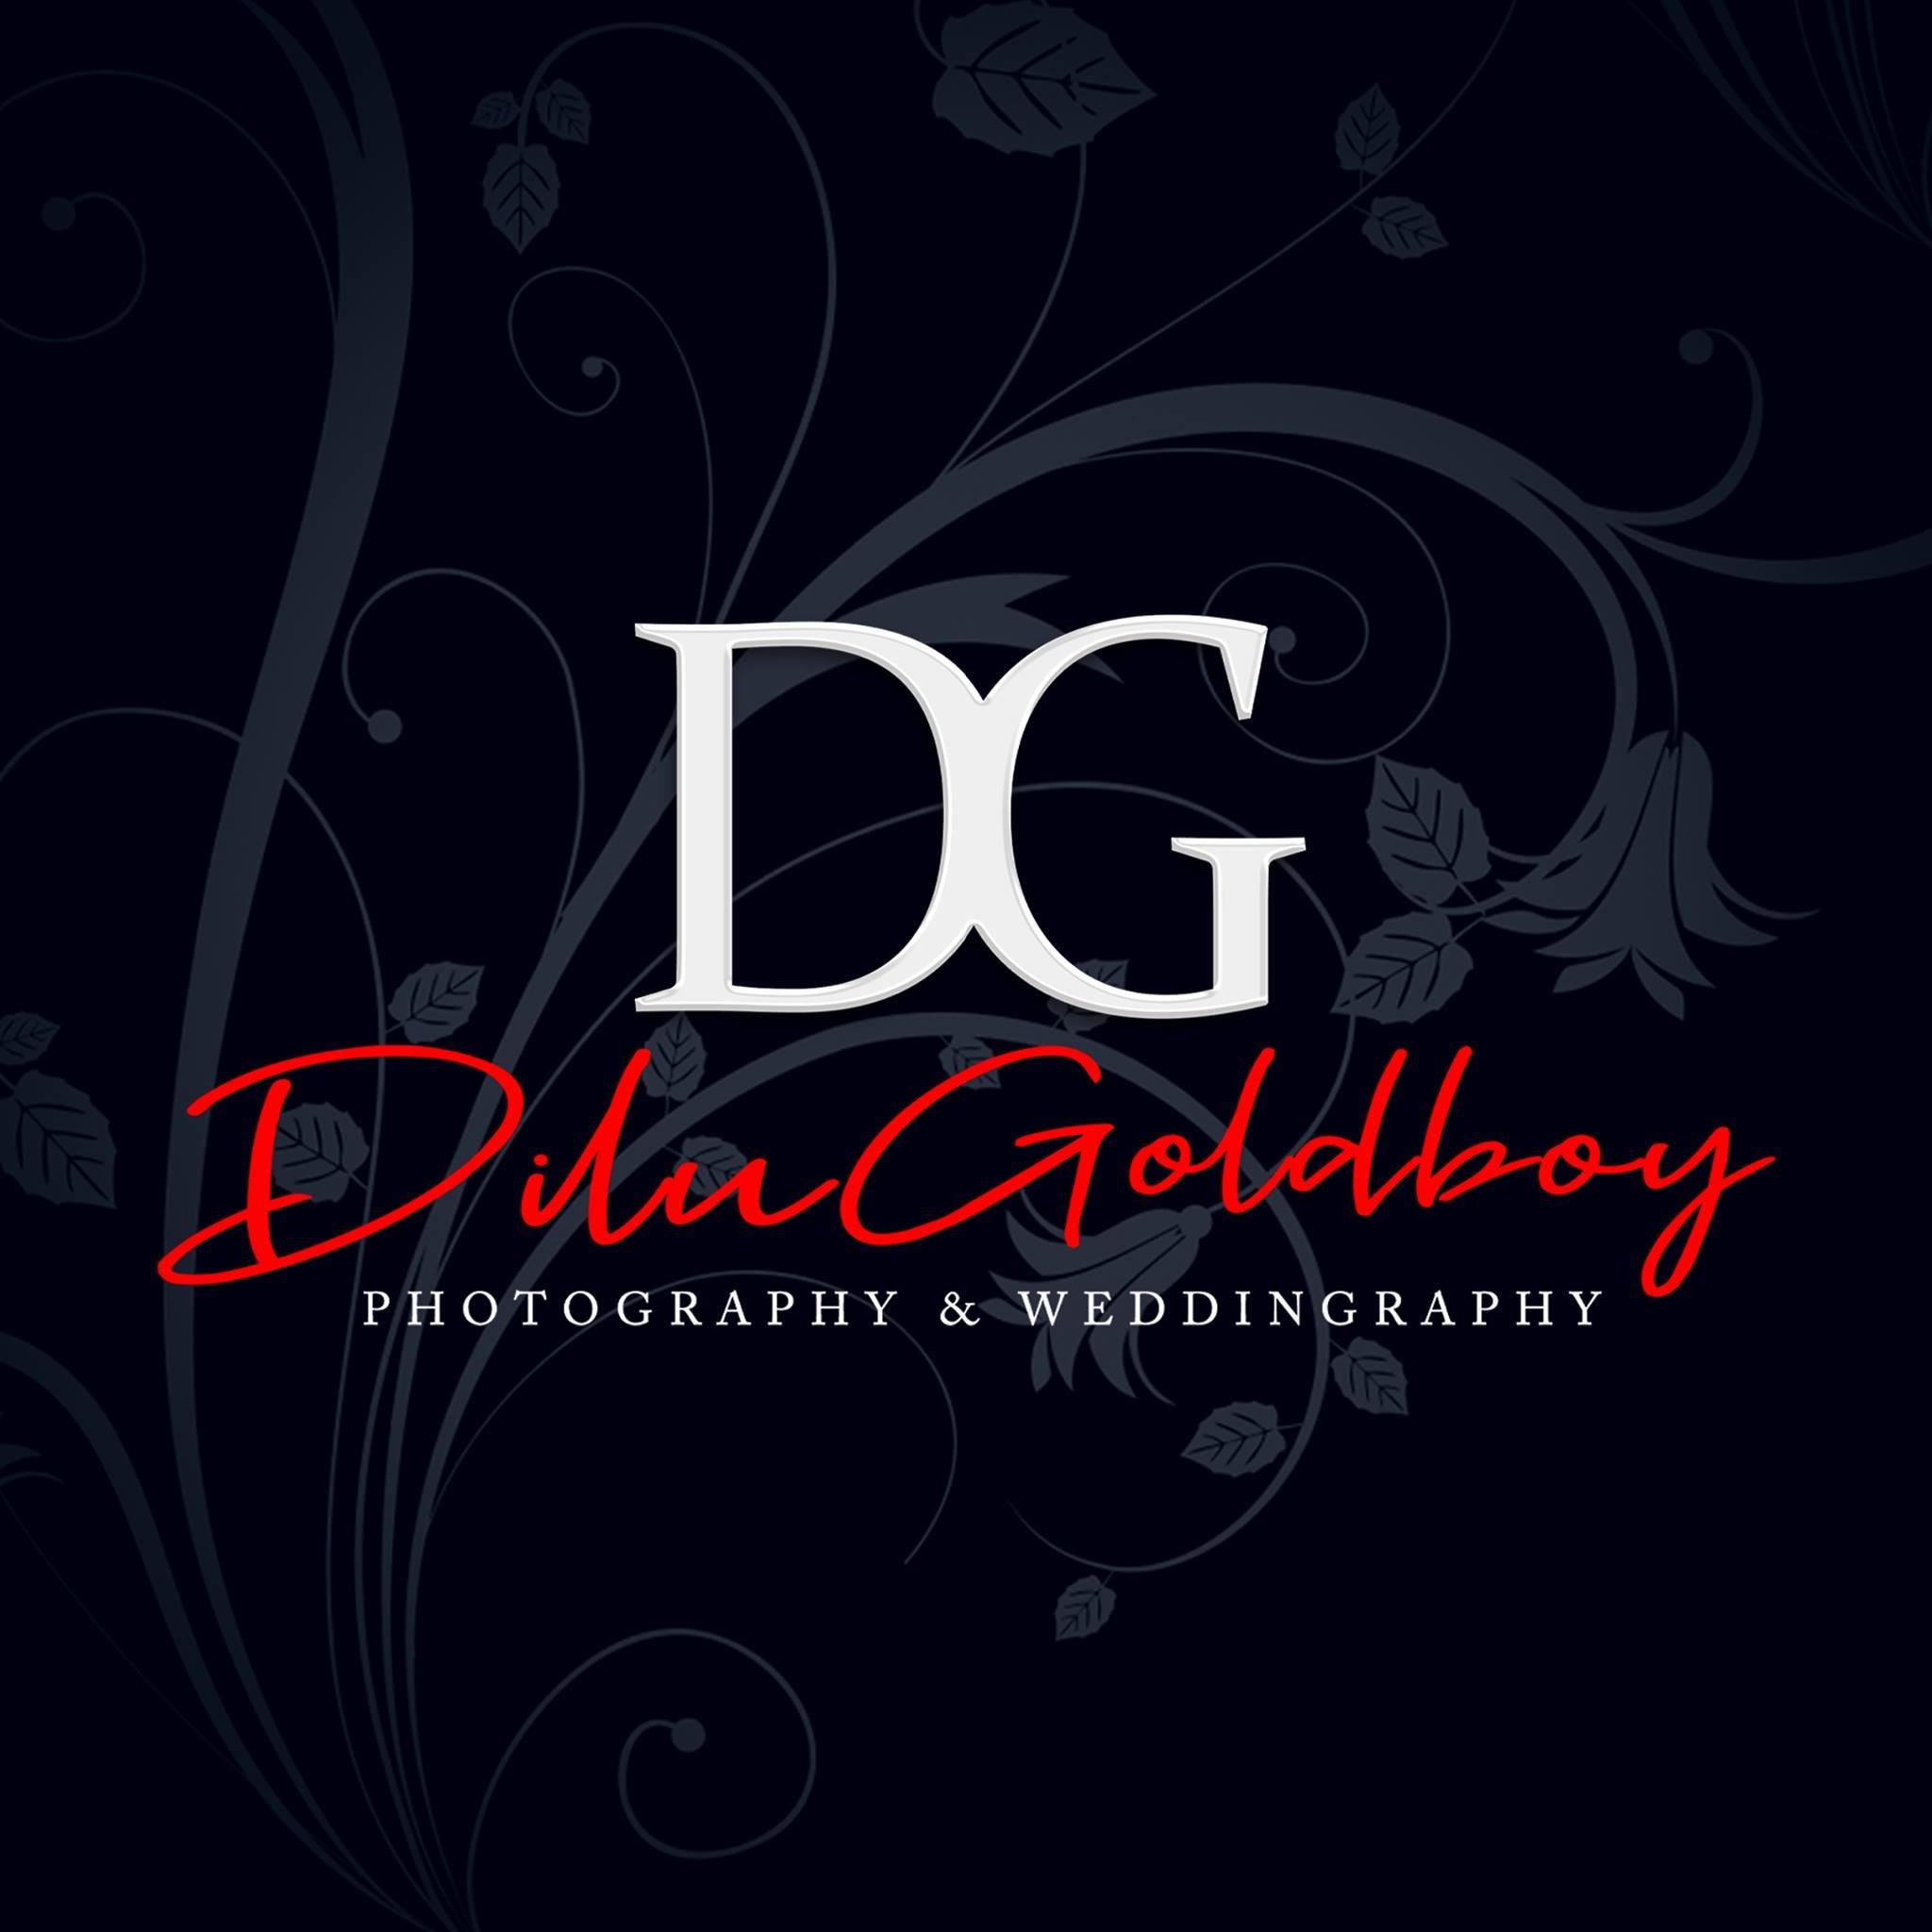 DG Photography & Weddingraphy - Logo